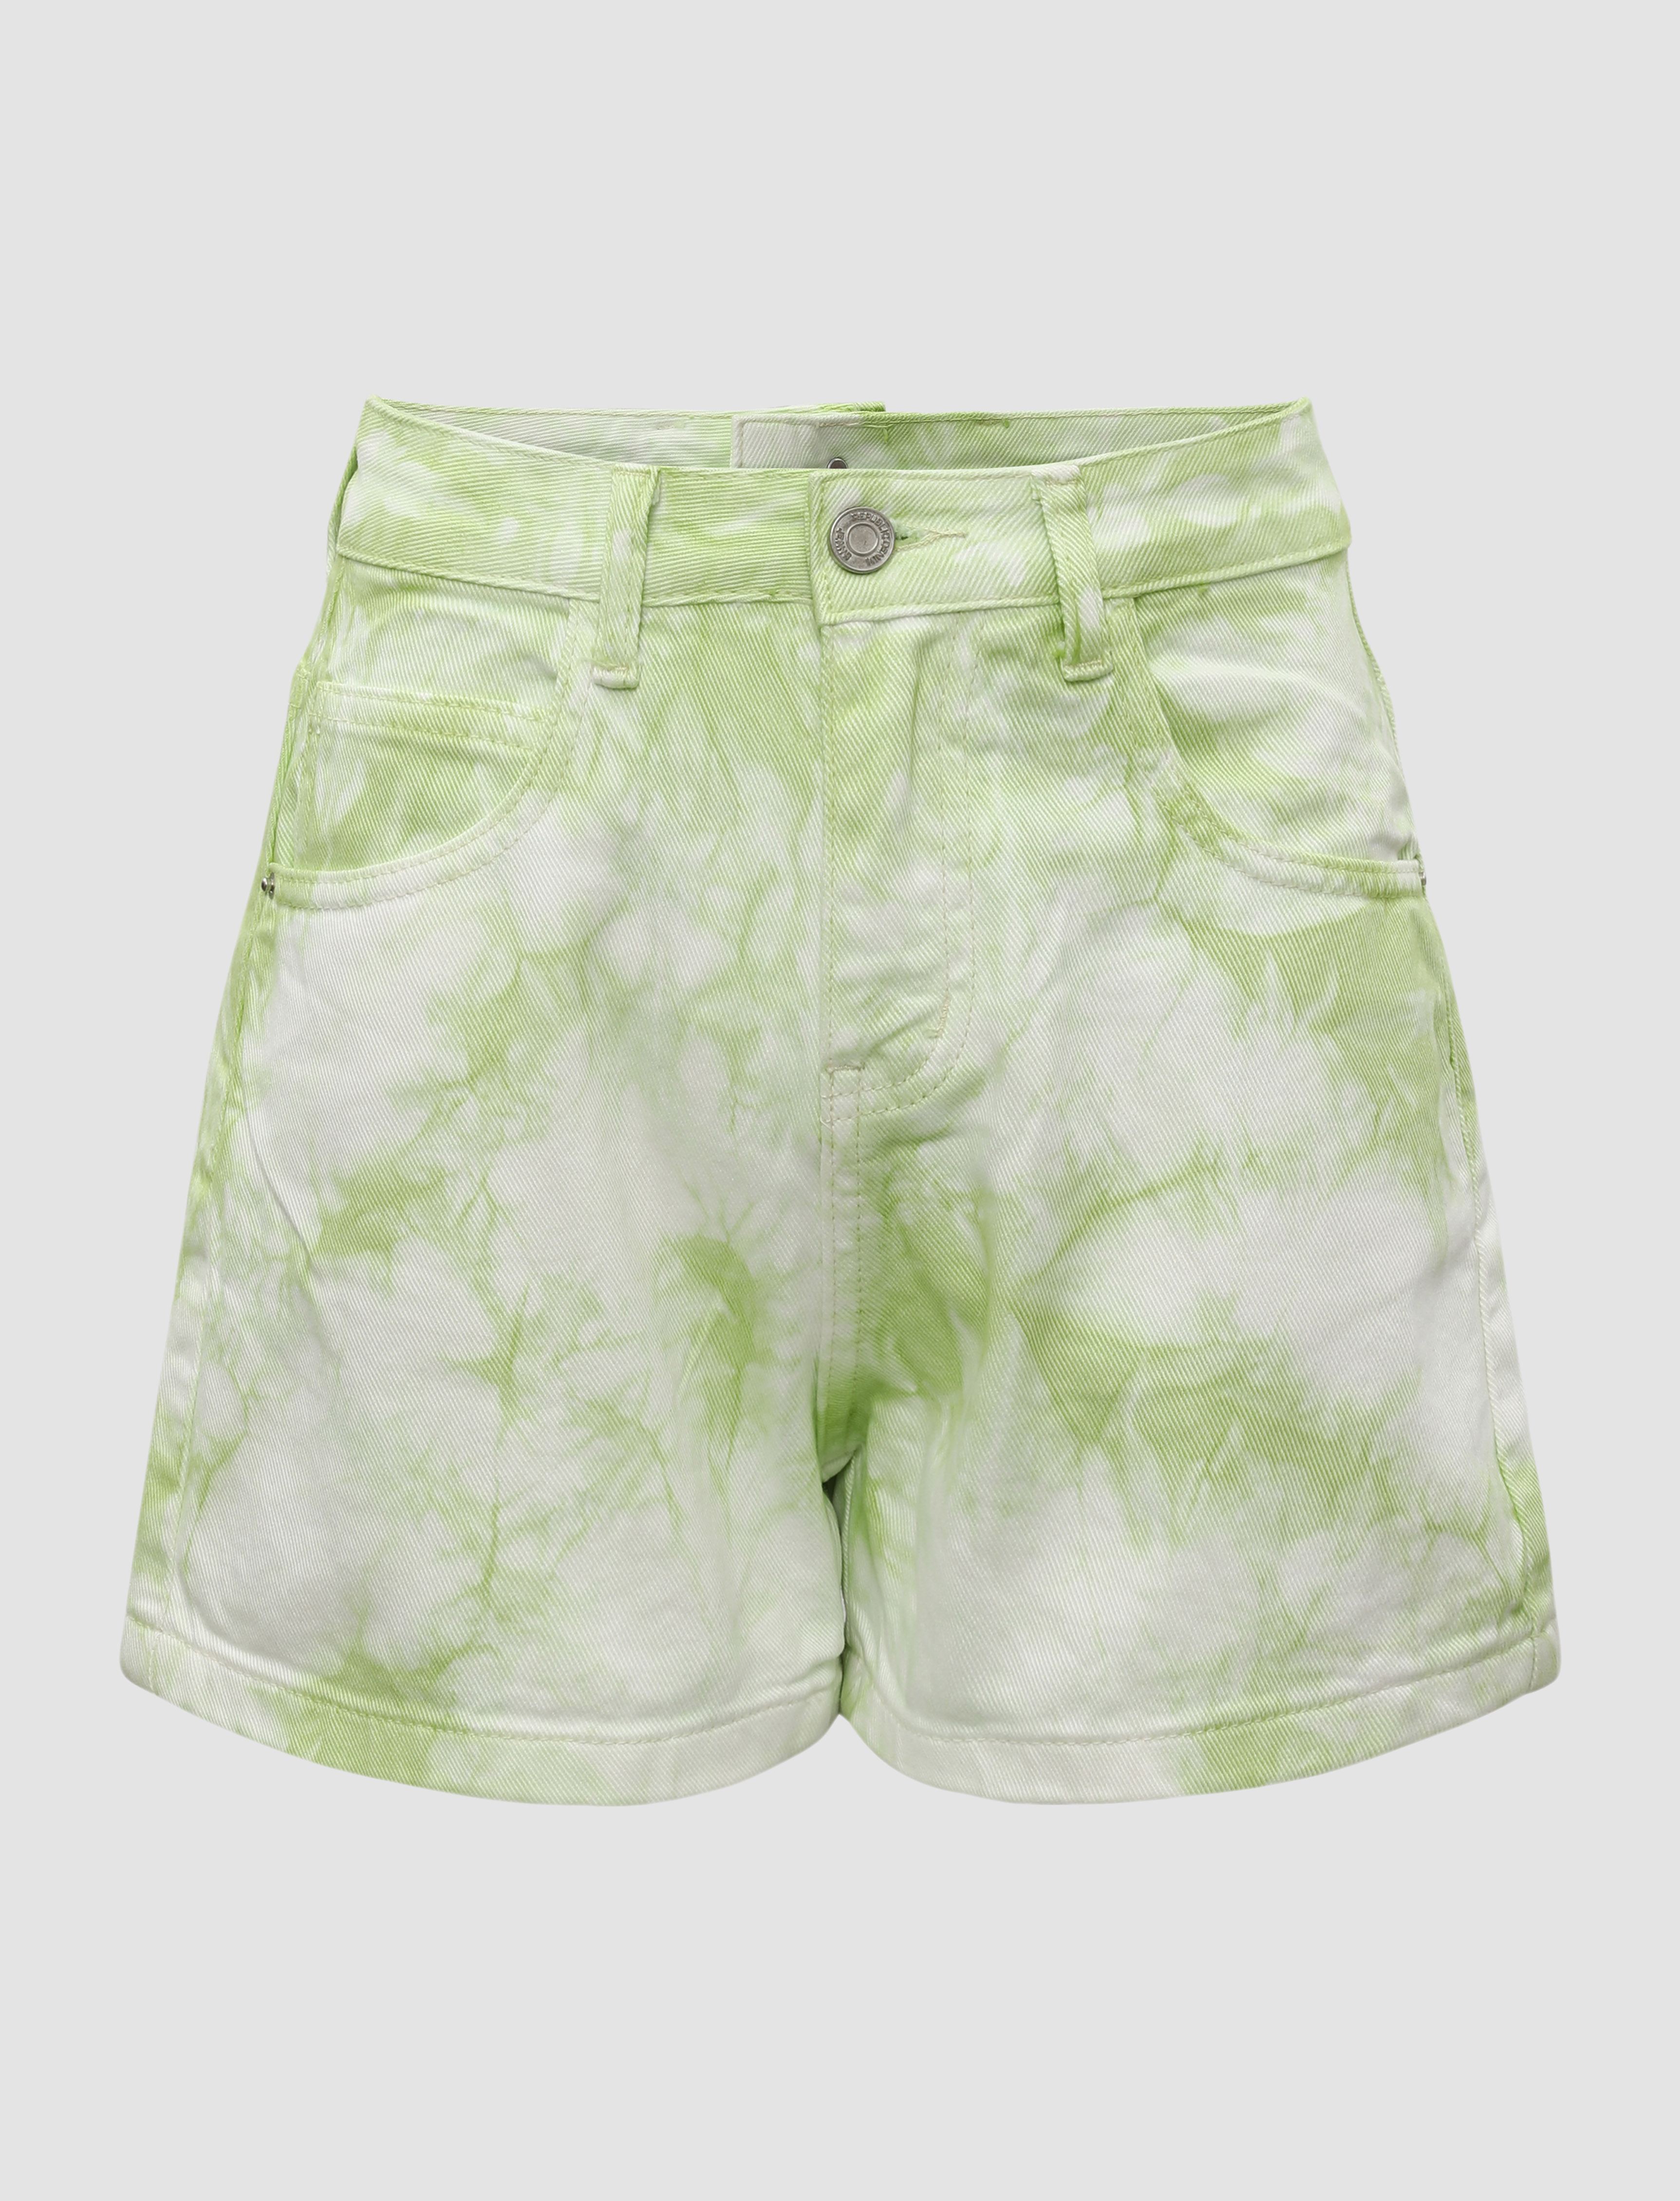 Green Tied Dye Denim Shorts - Cider